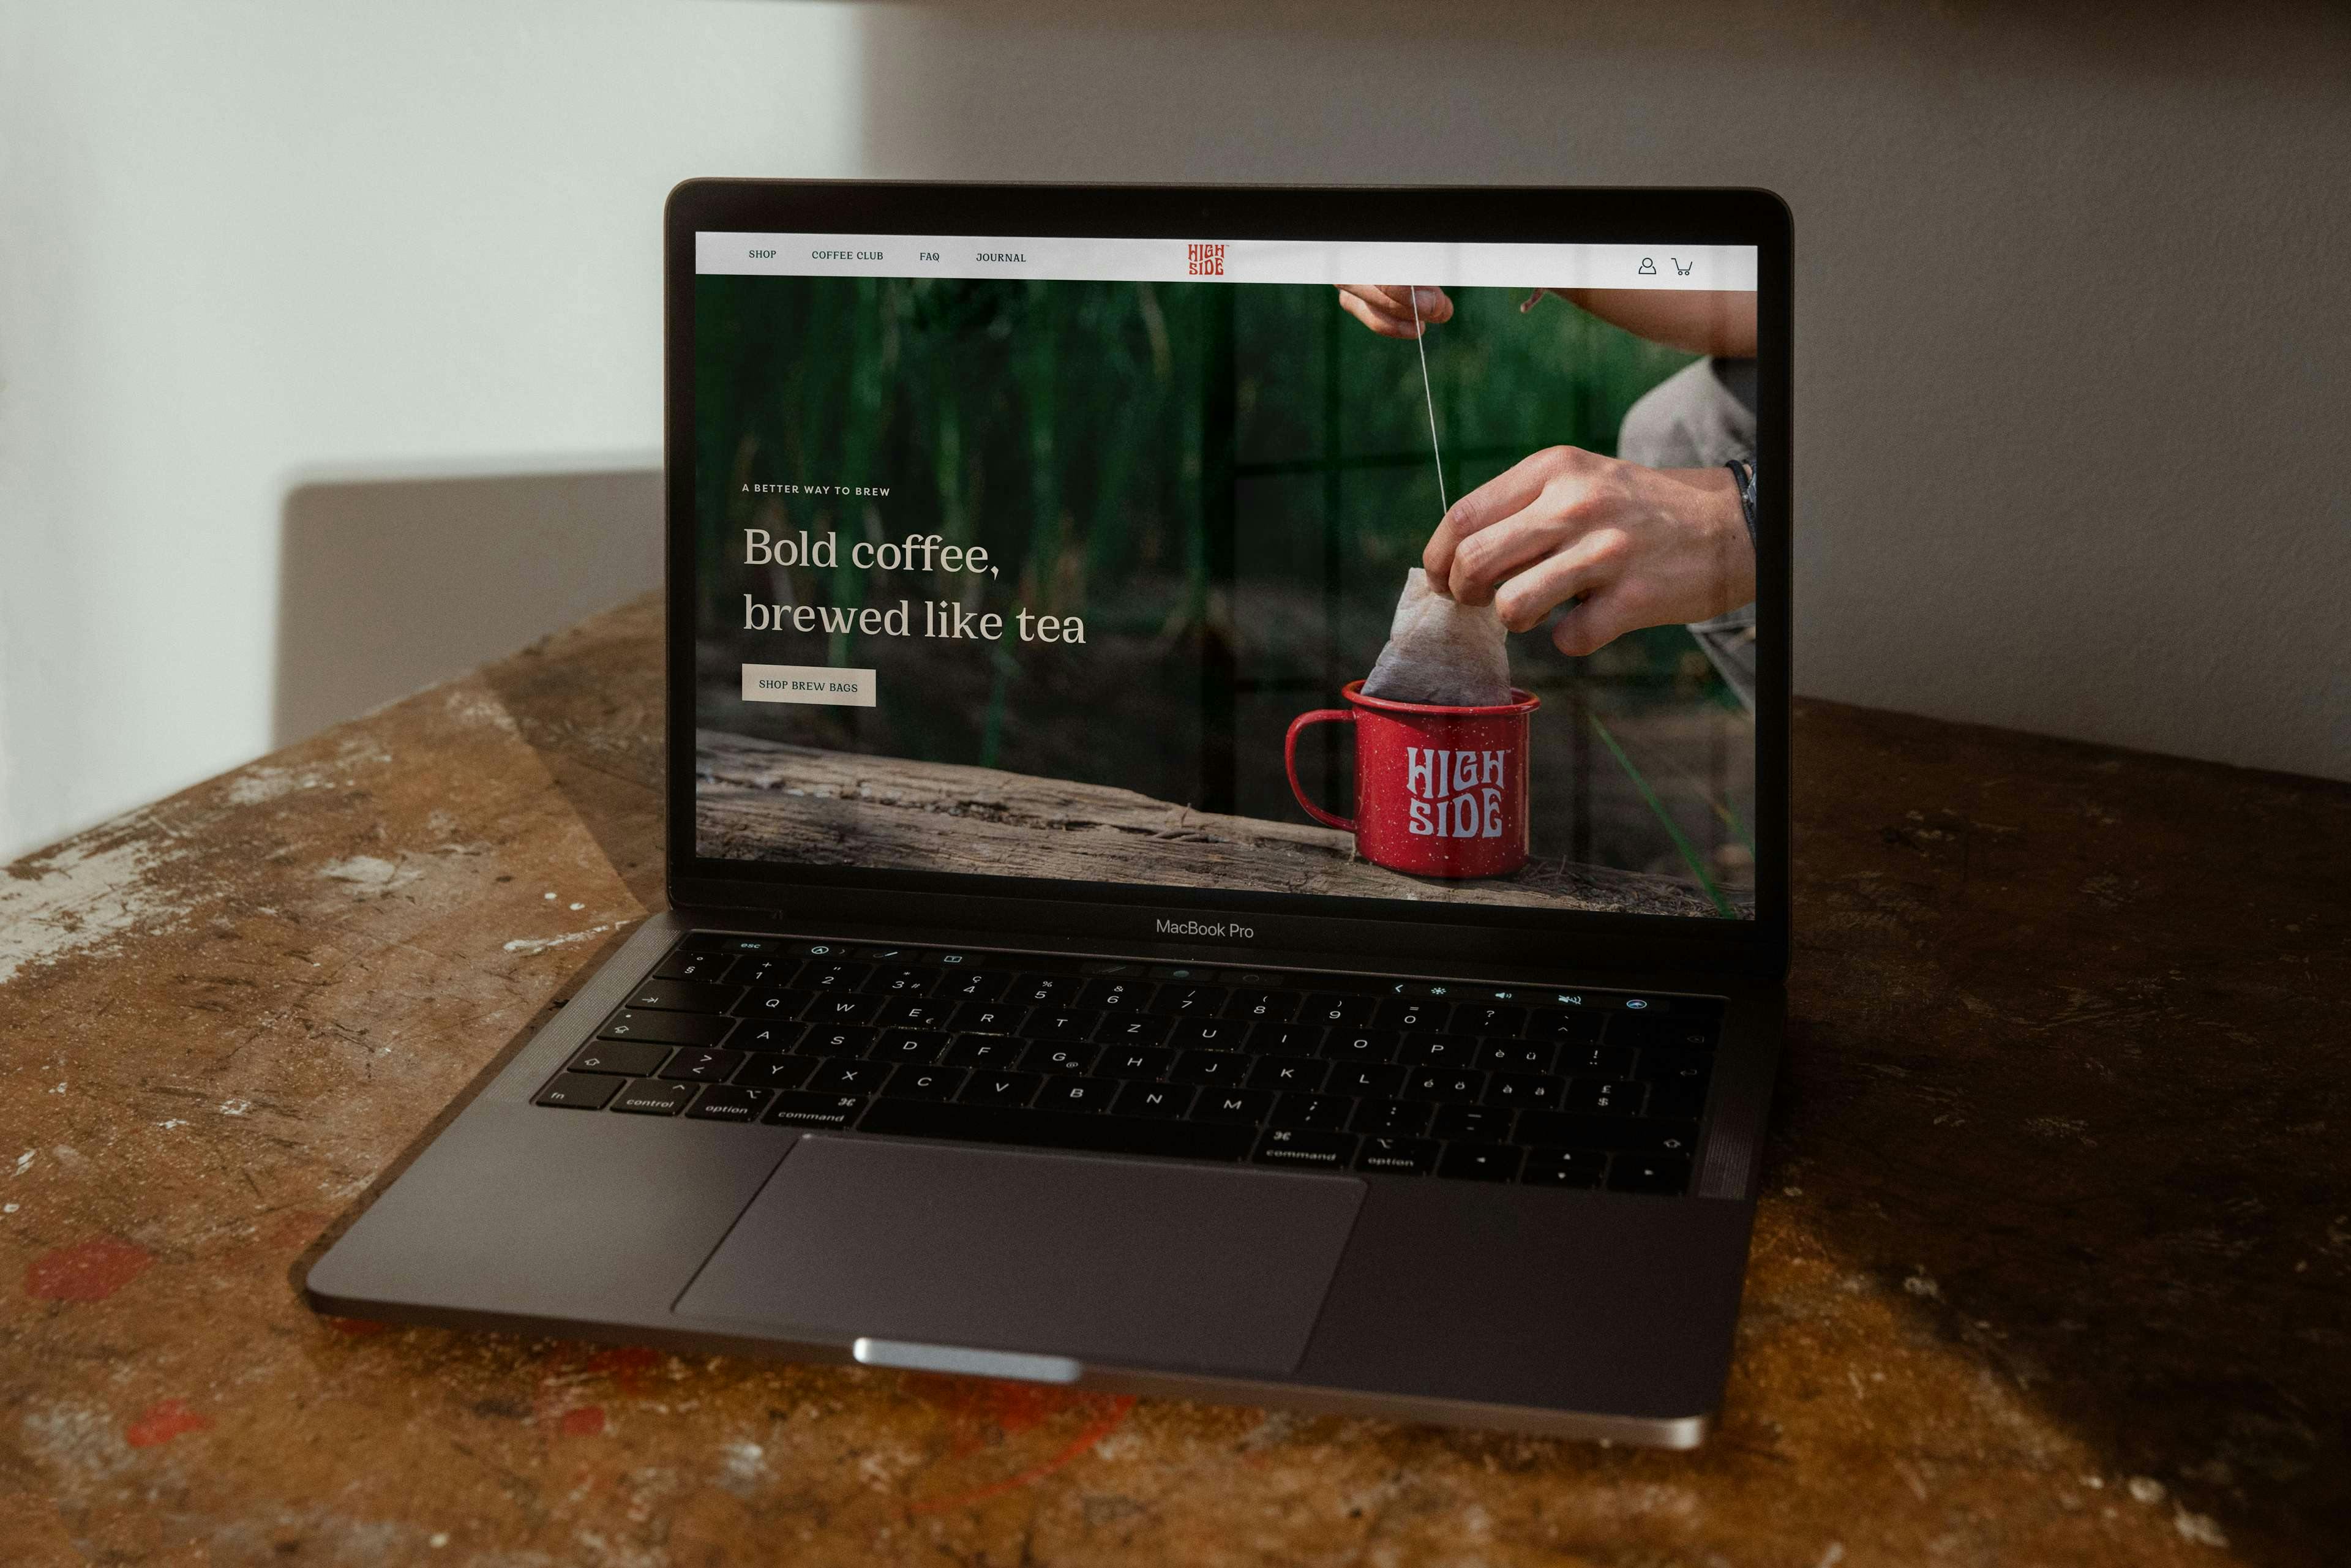 high side coffee website on laptop